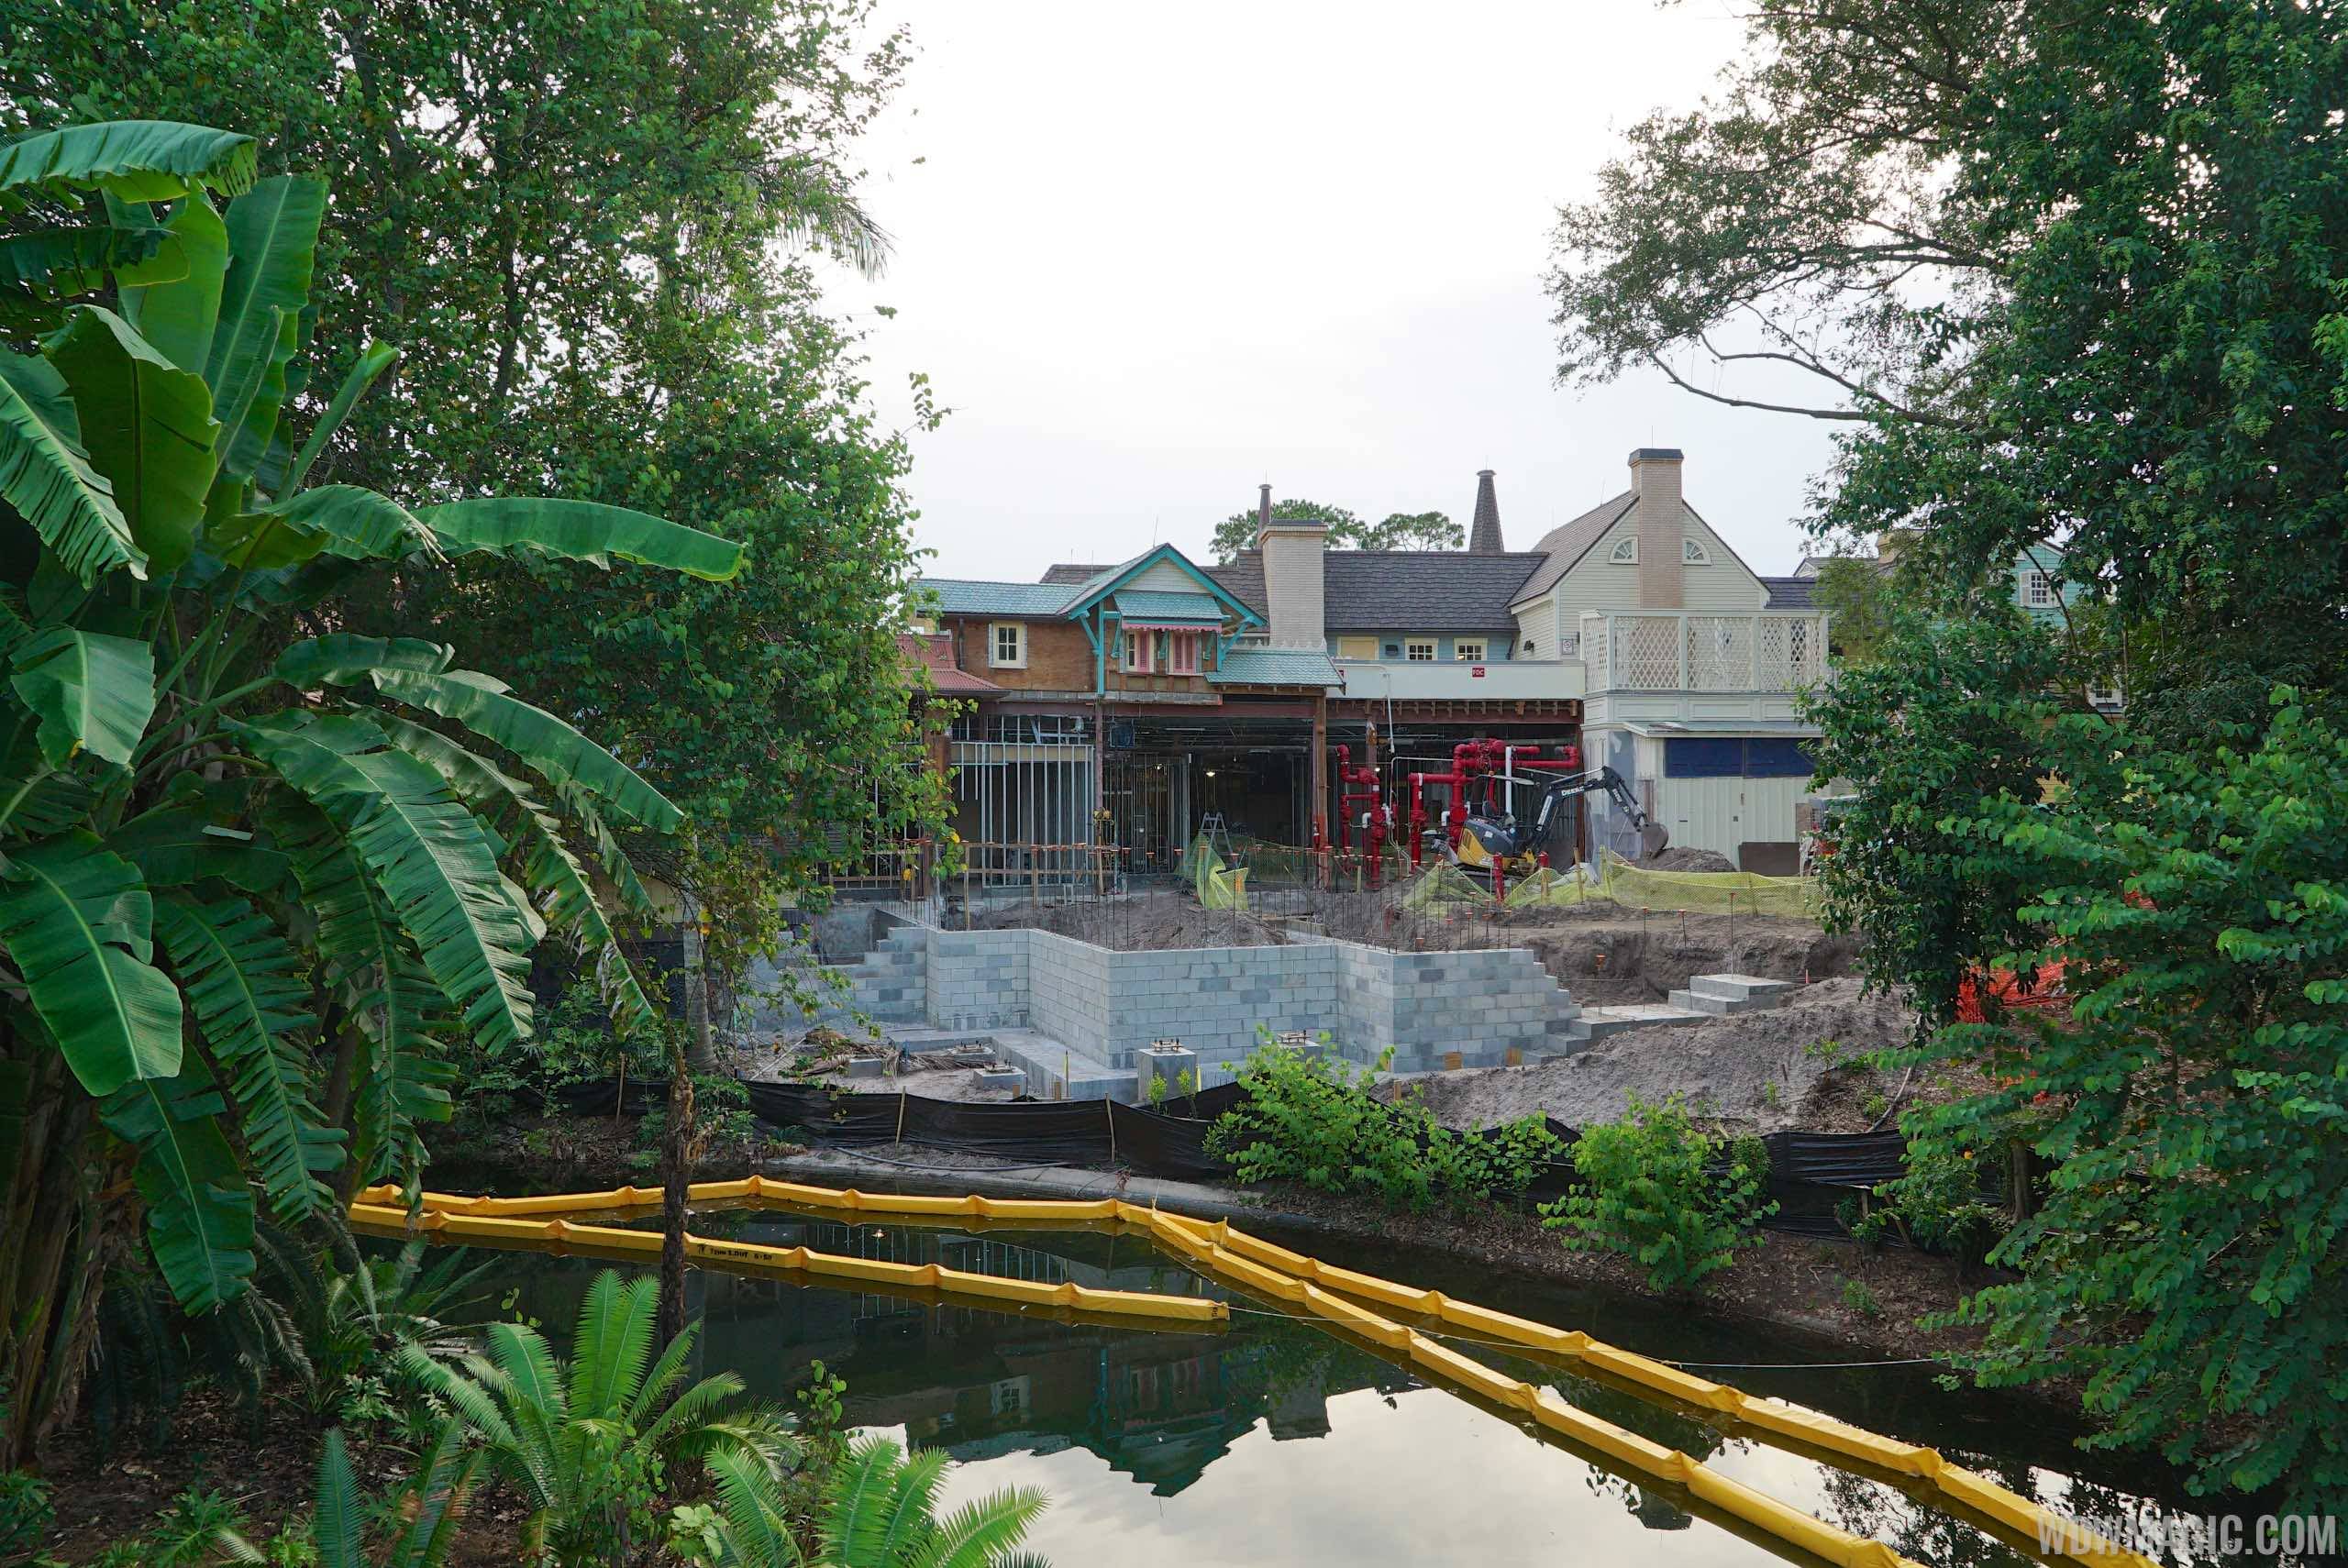 PHOTOS - Expansion construction underway at the Adventureland Veranda Restaurant